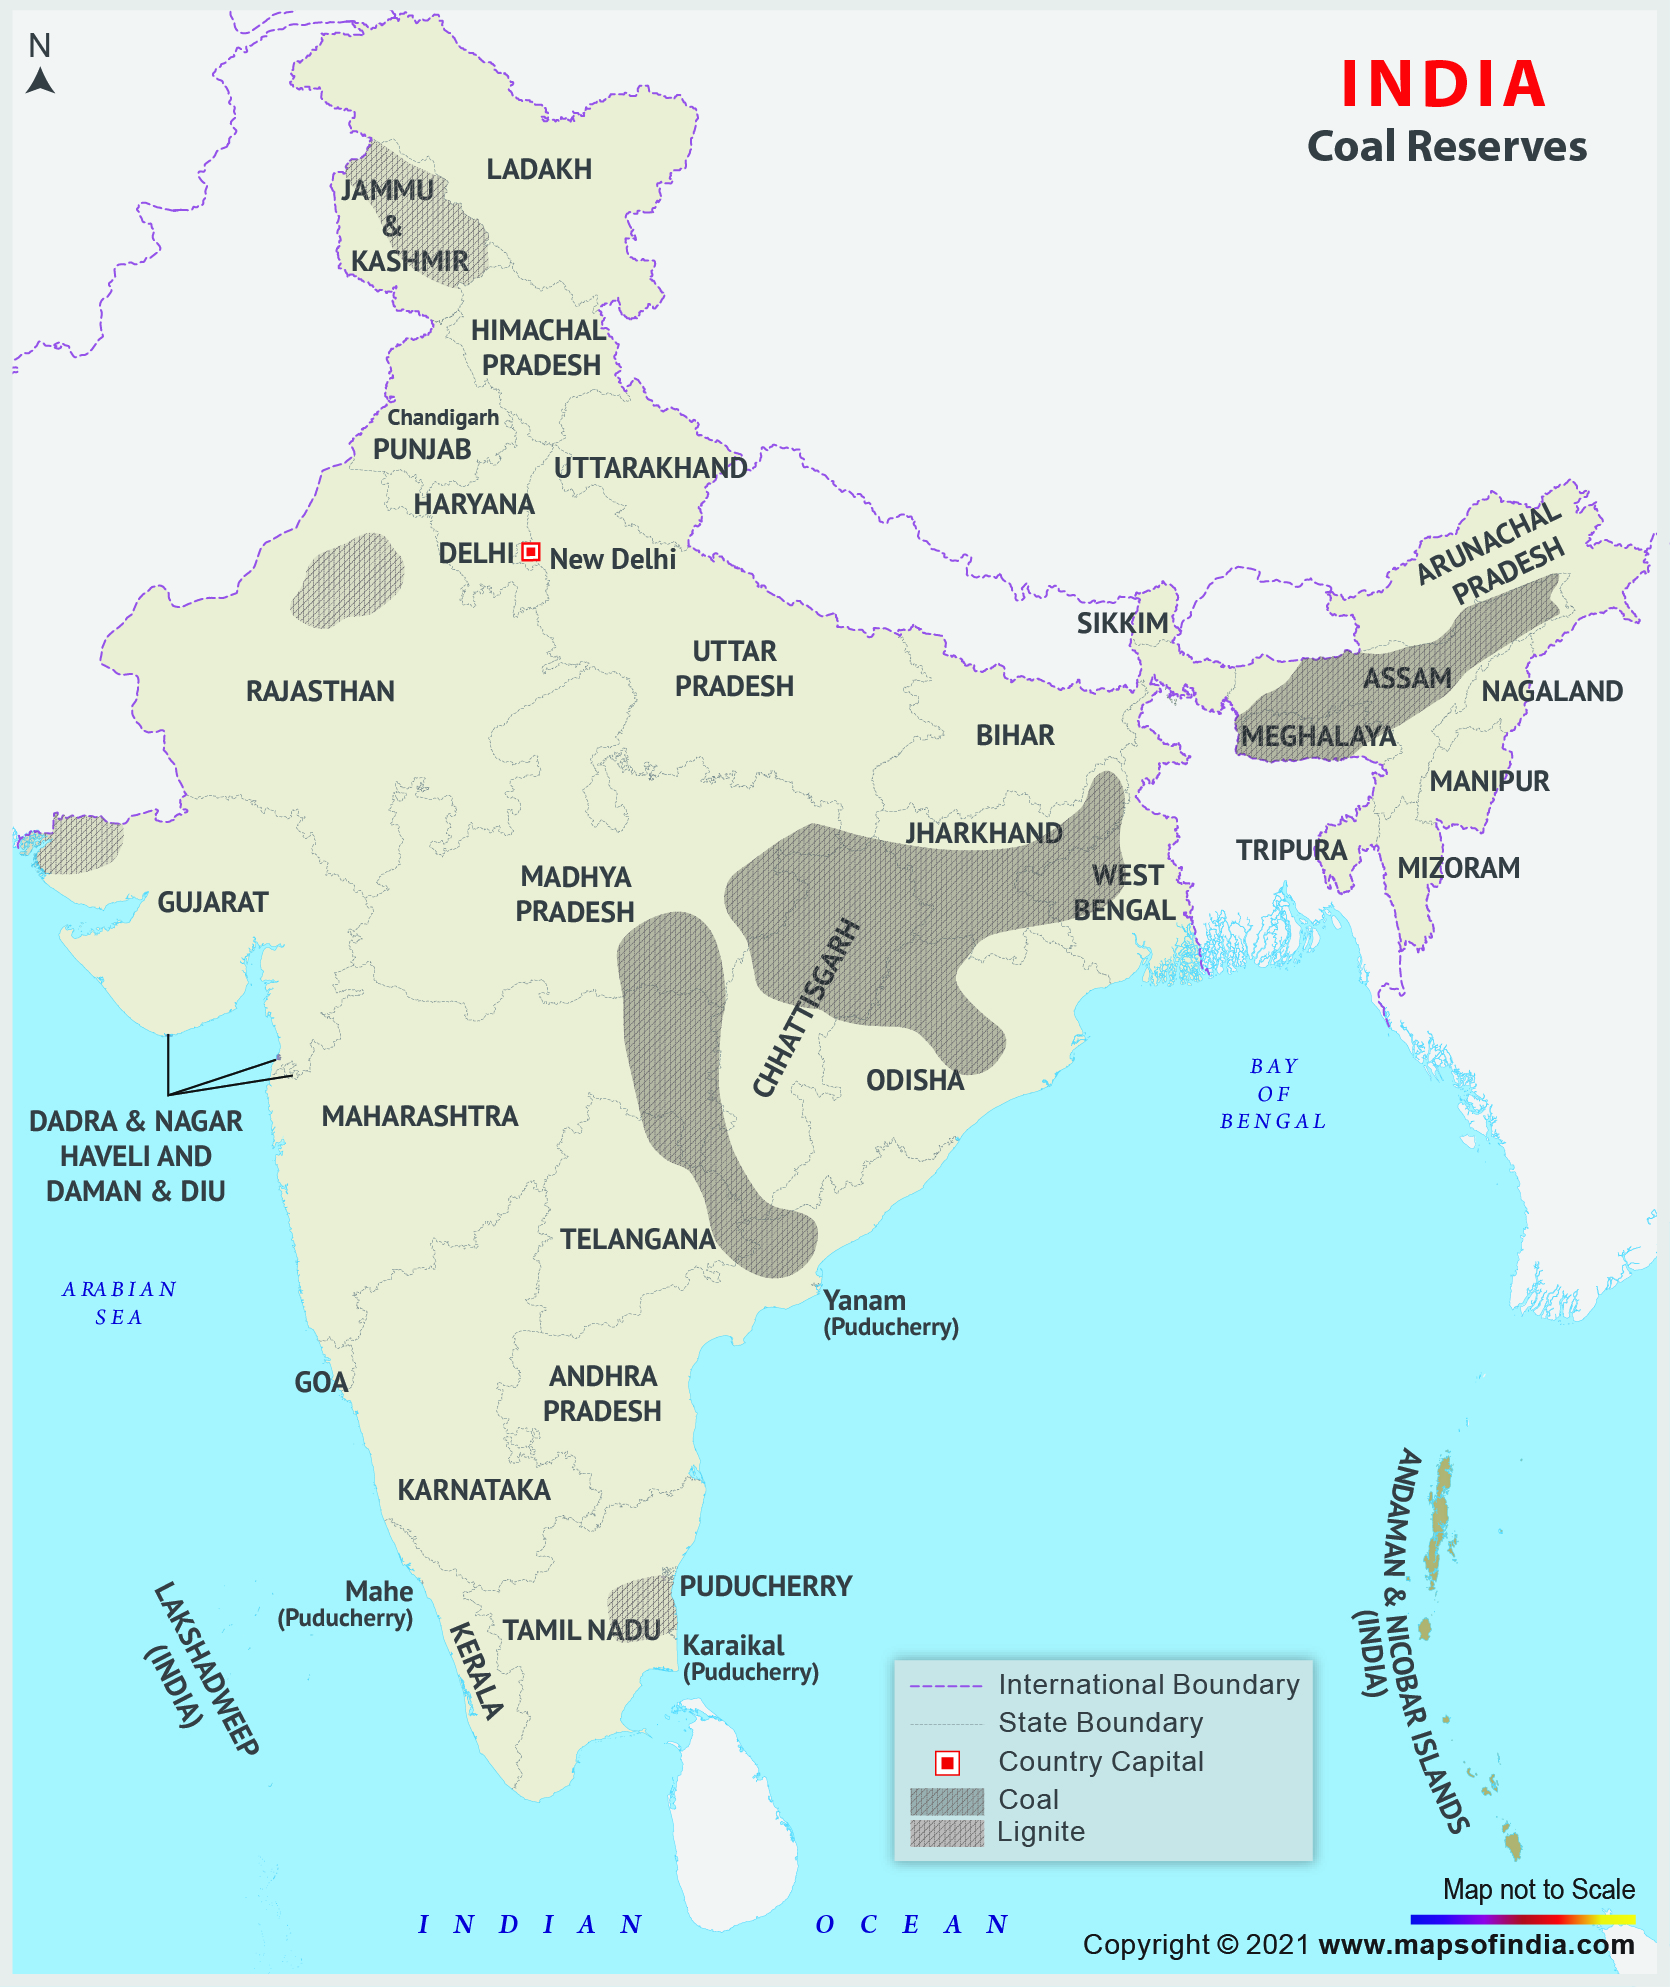 http://www.mapsofindia.com/maps/india/india-map-coalreserves.jpg